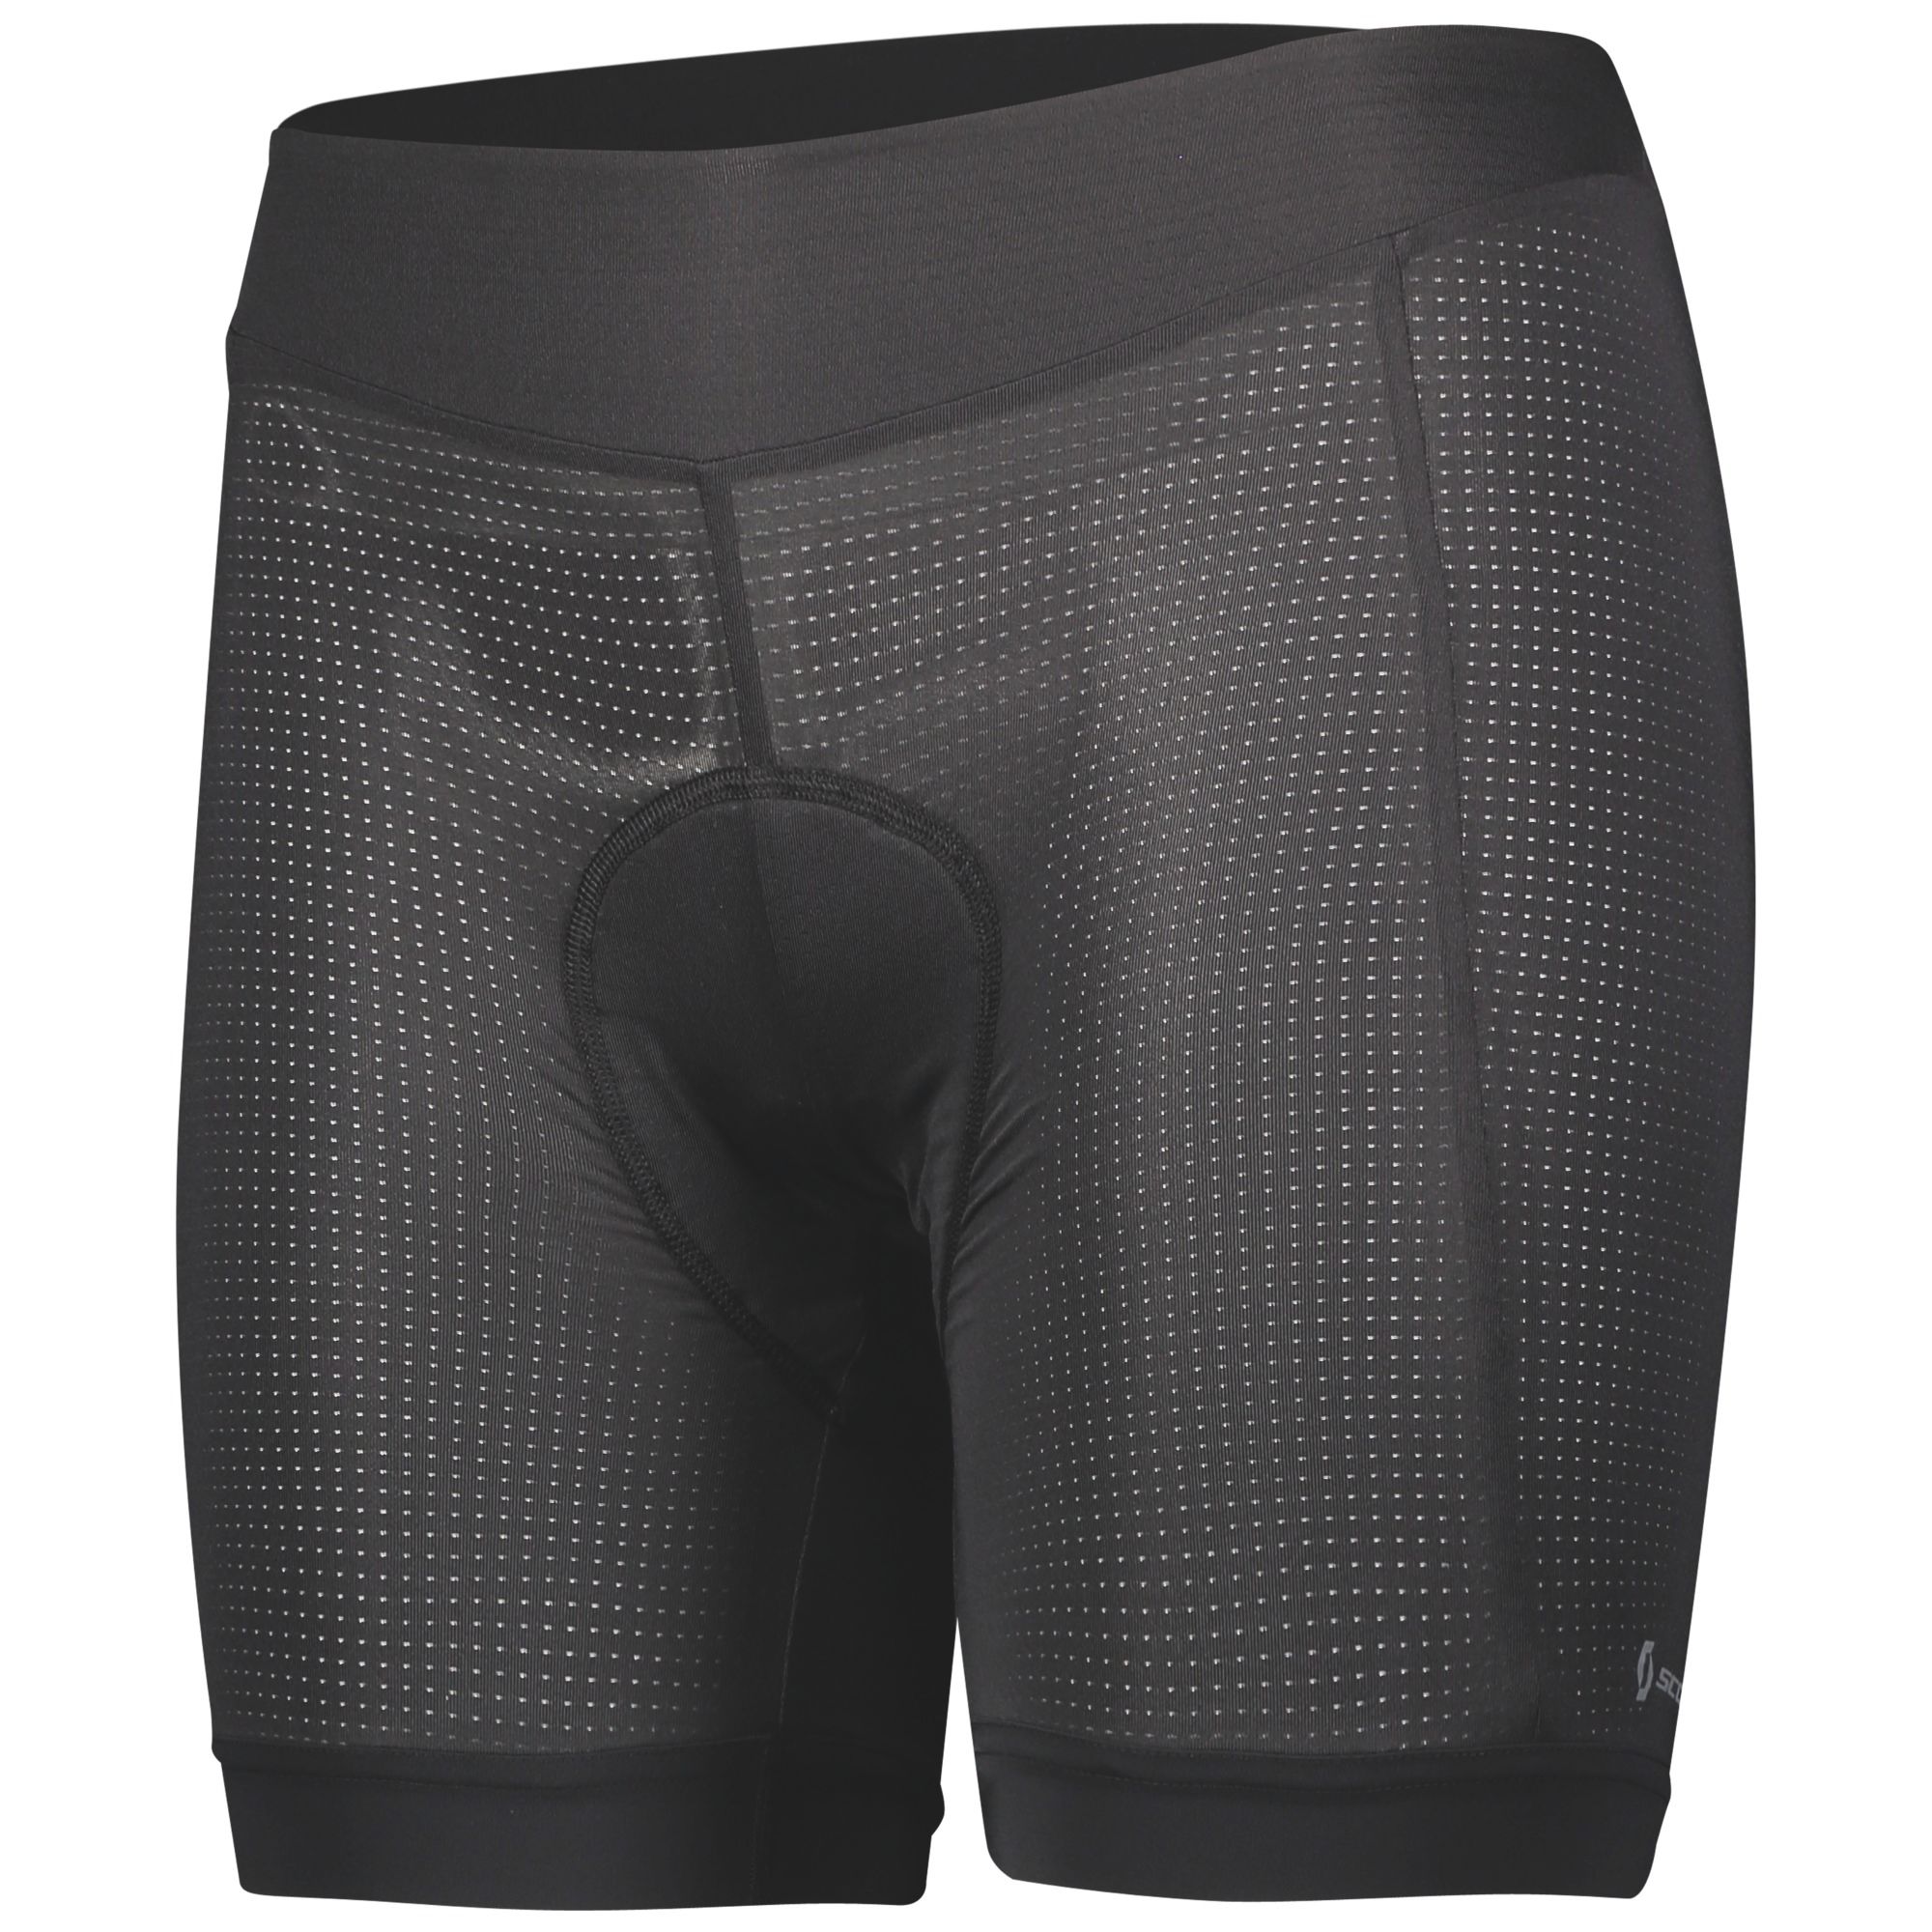 Scott Shorts M's Trail Underwear Pro +++ - Men's technical bike underwear